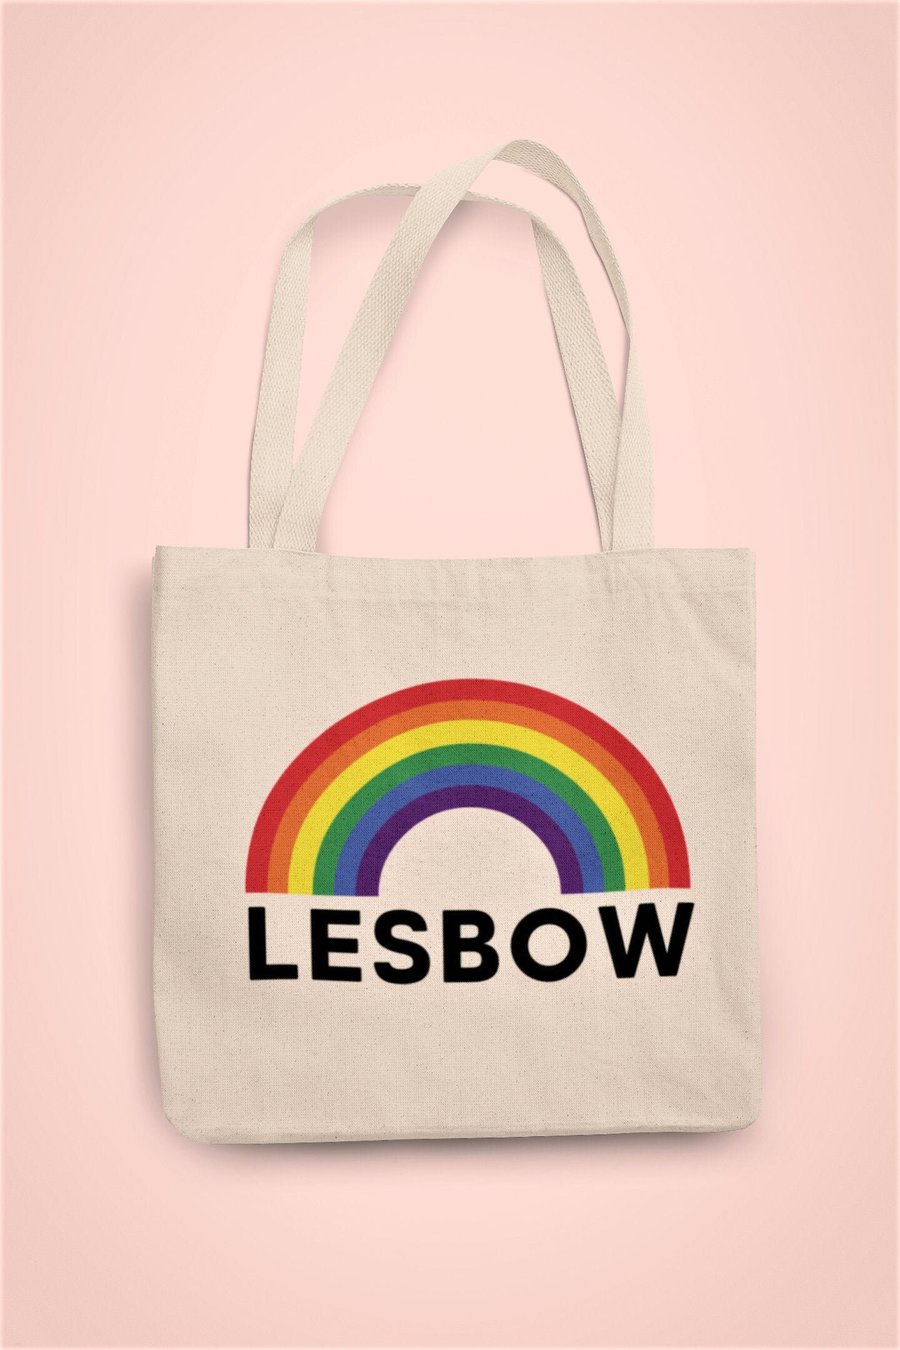 Lesbow Rainbow Tote Bag Lesbian LGBT Gay Reusable Cotton bag - Pride Theme 